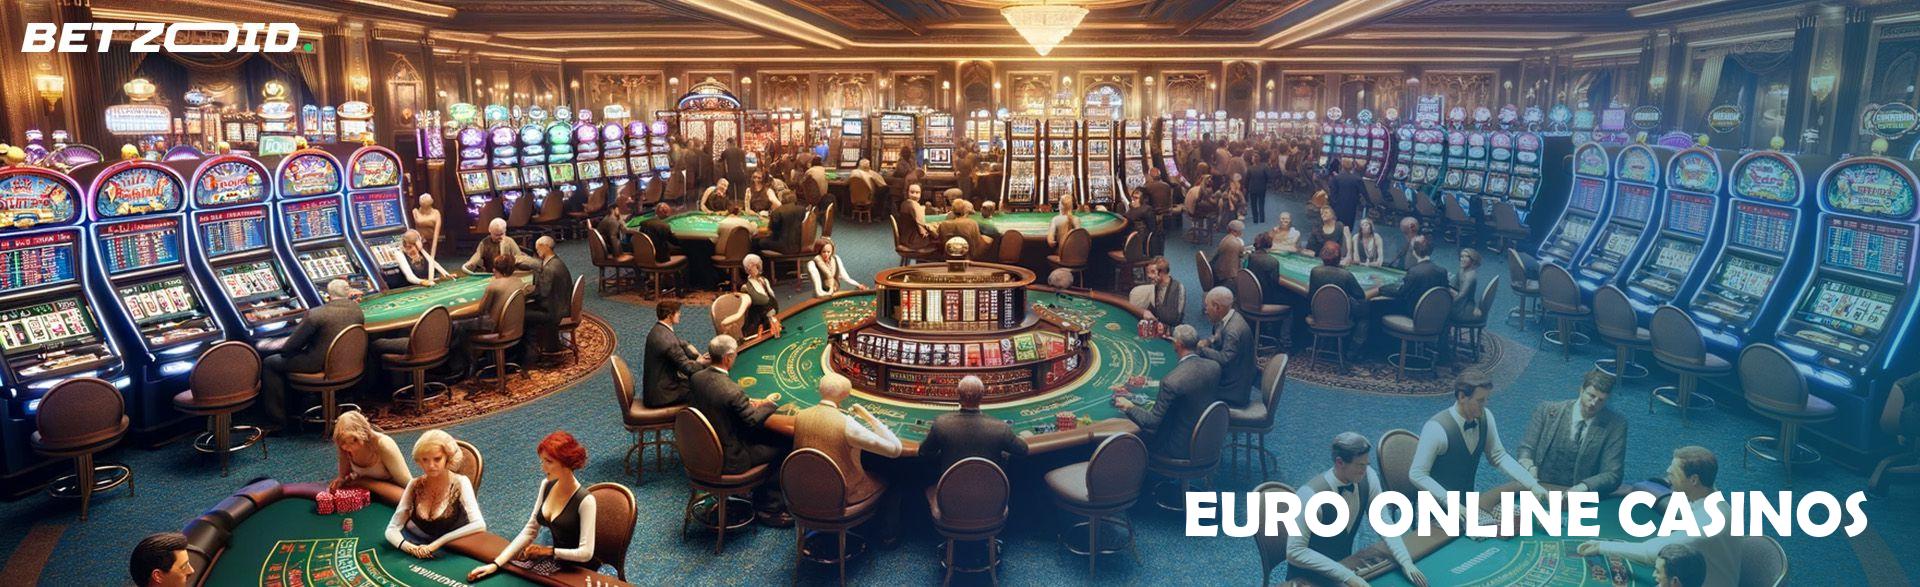 Euro Online Casinos.